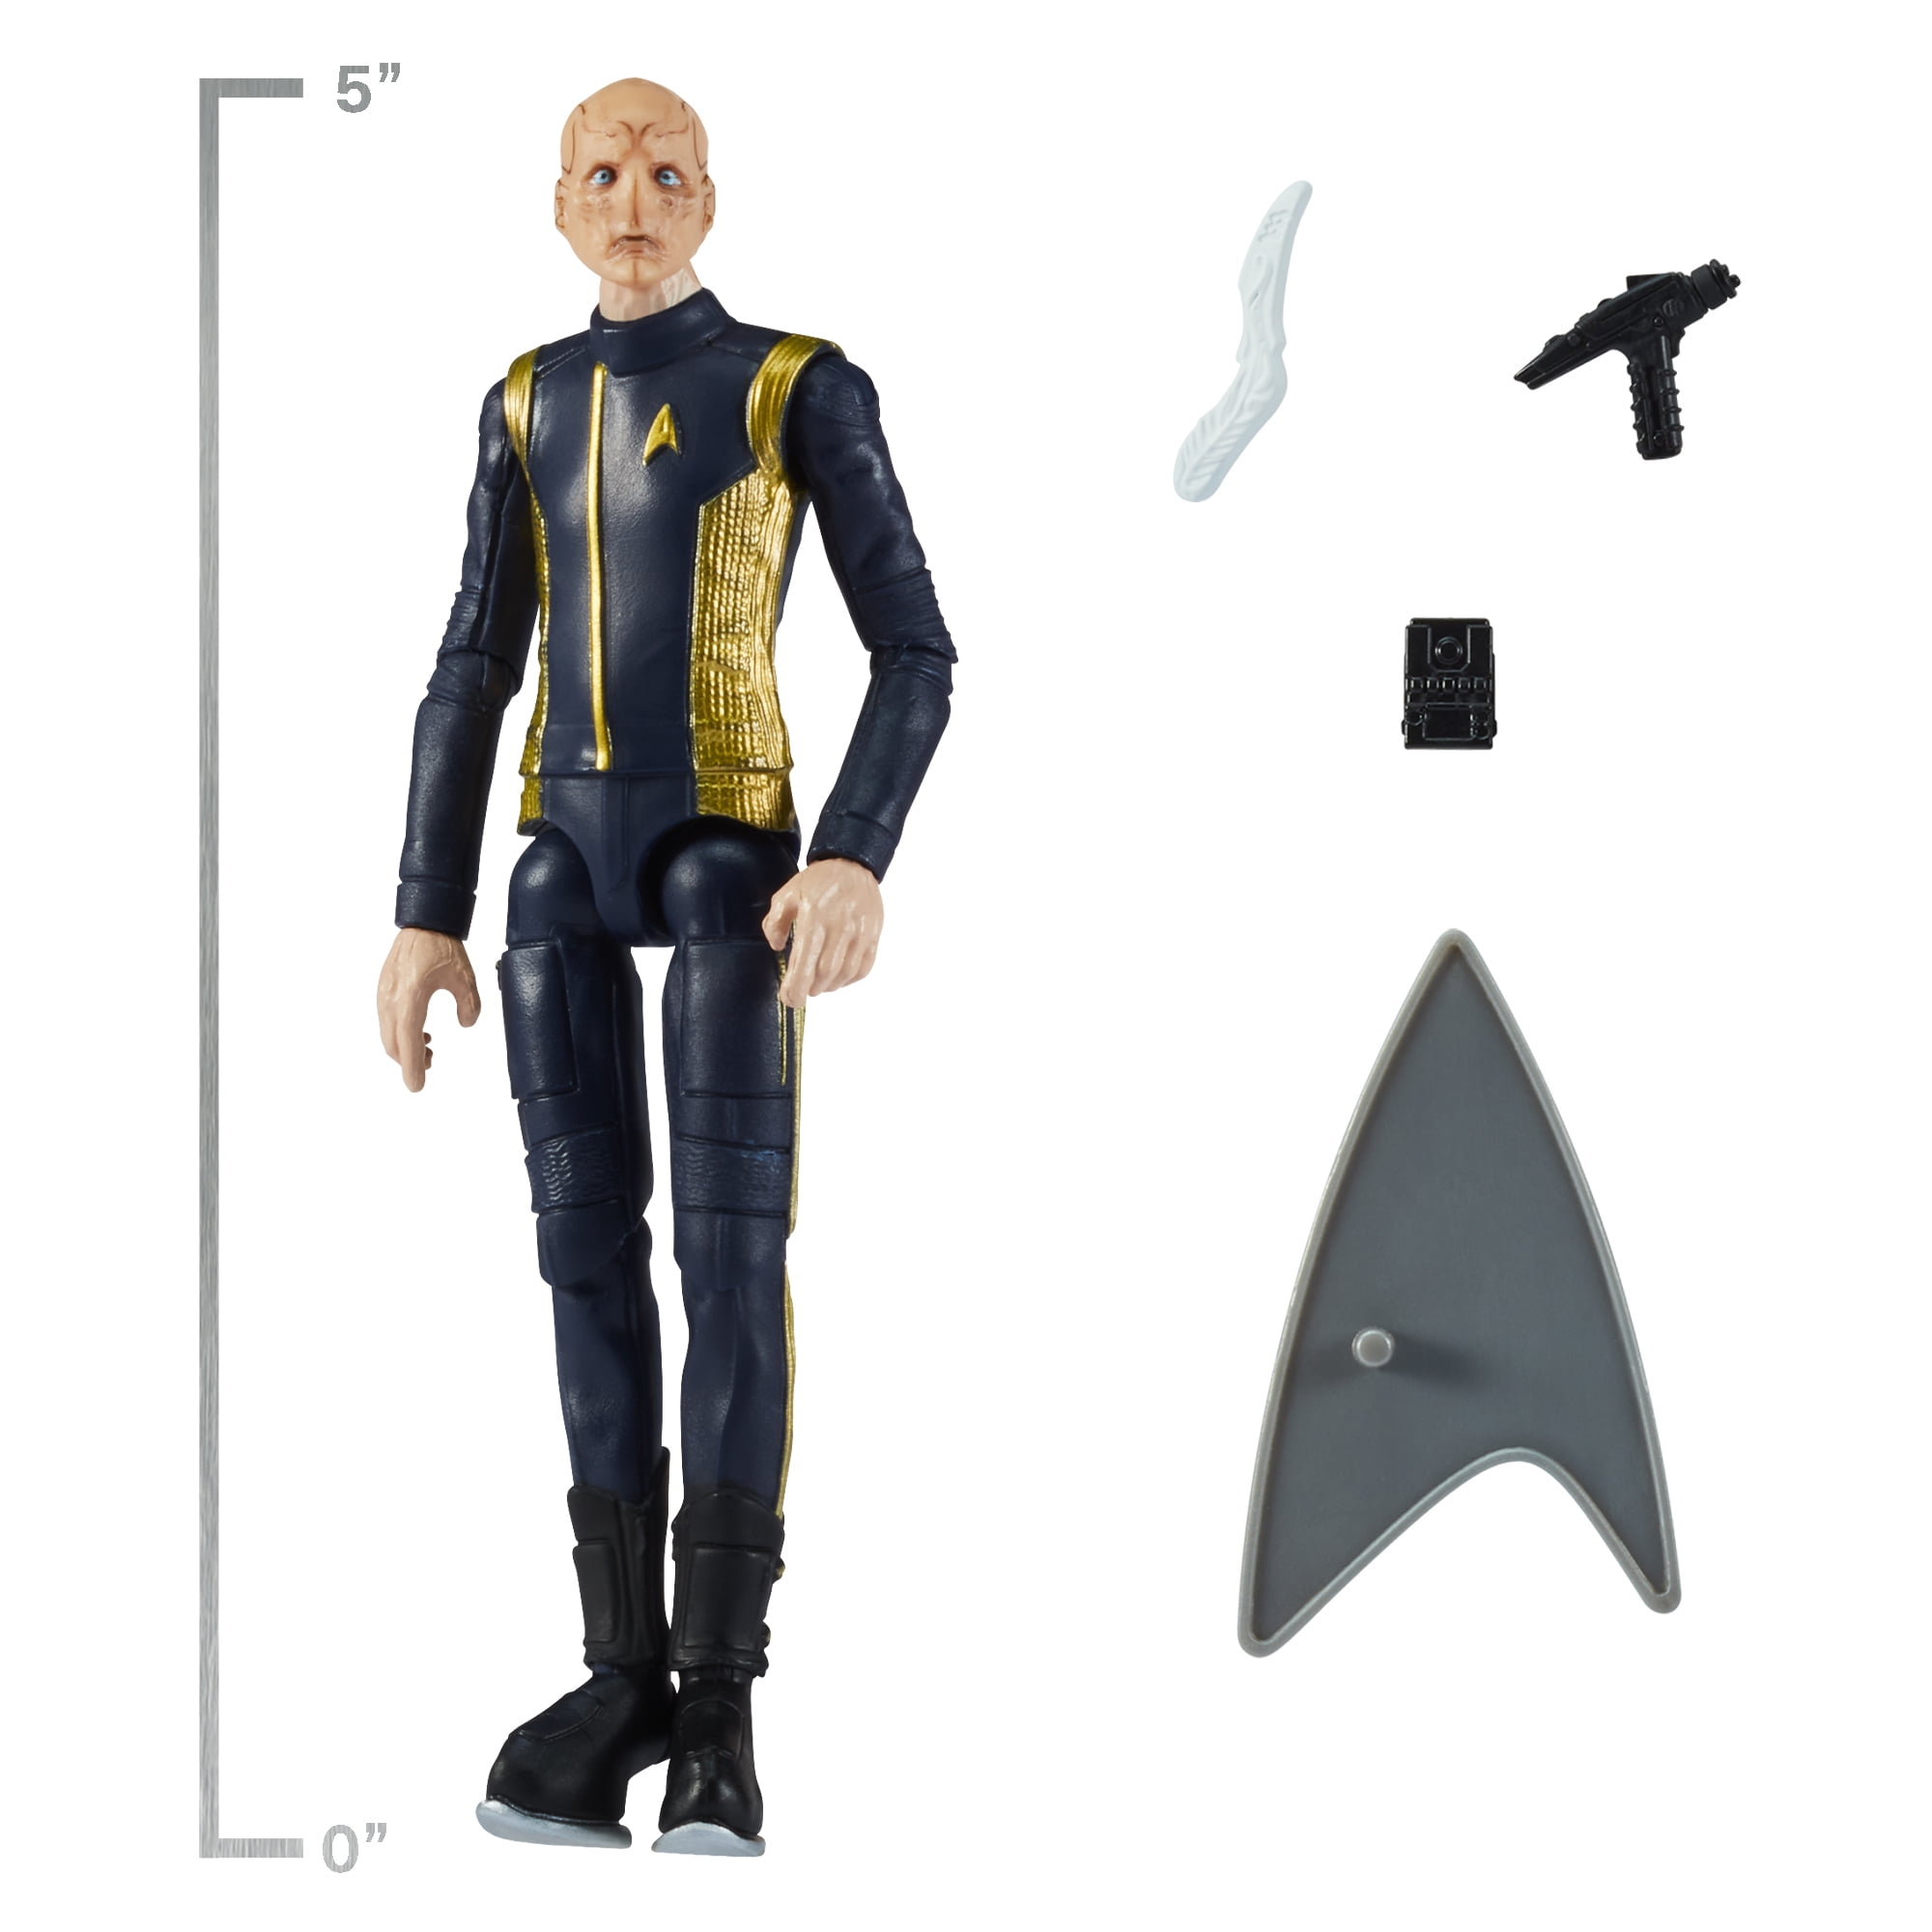 5'' Star Trek Commander Saru (DISCOVERY) Action Figure w/ Accessories  $3.13 + Free S&H w/ Walmart+ or $35+